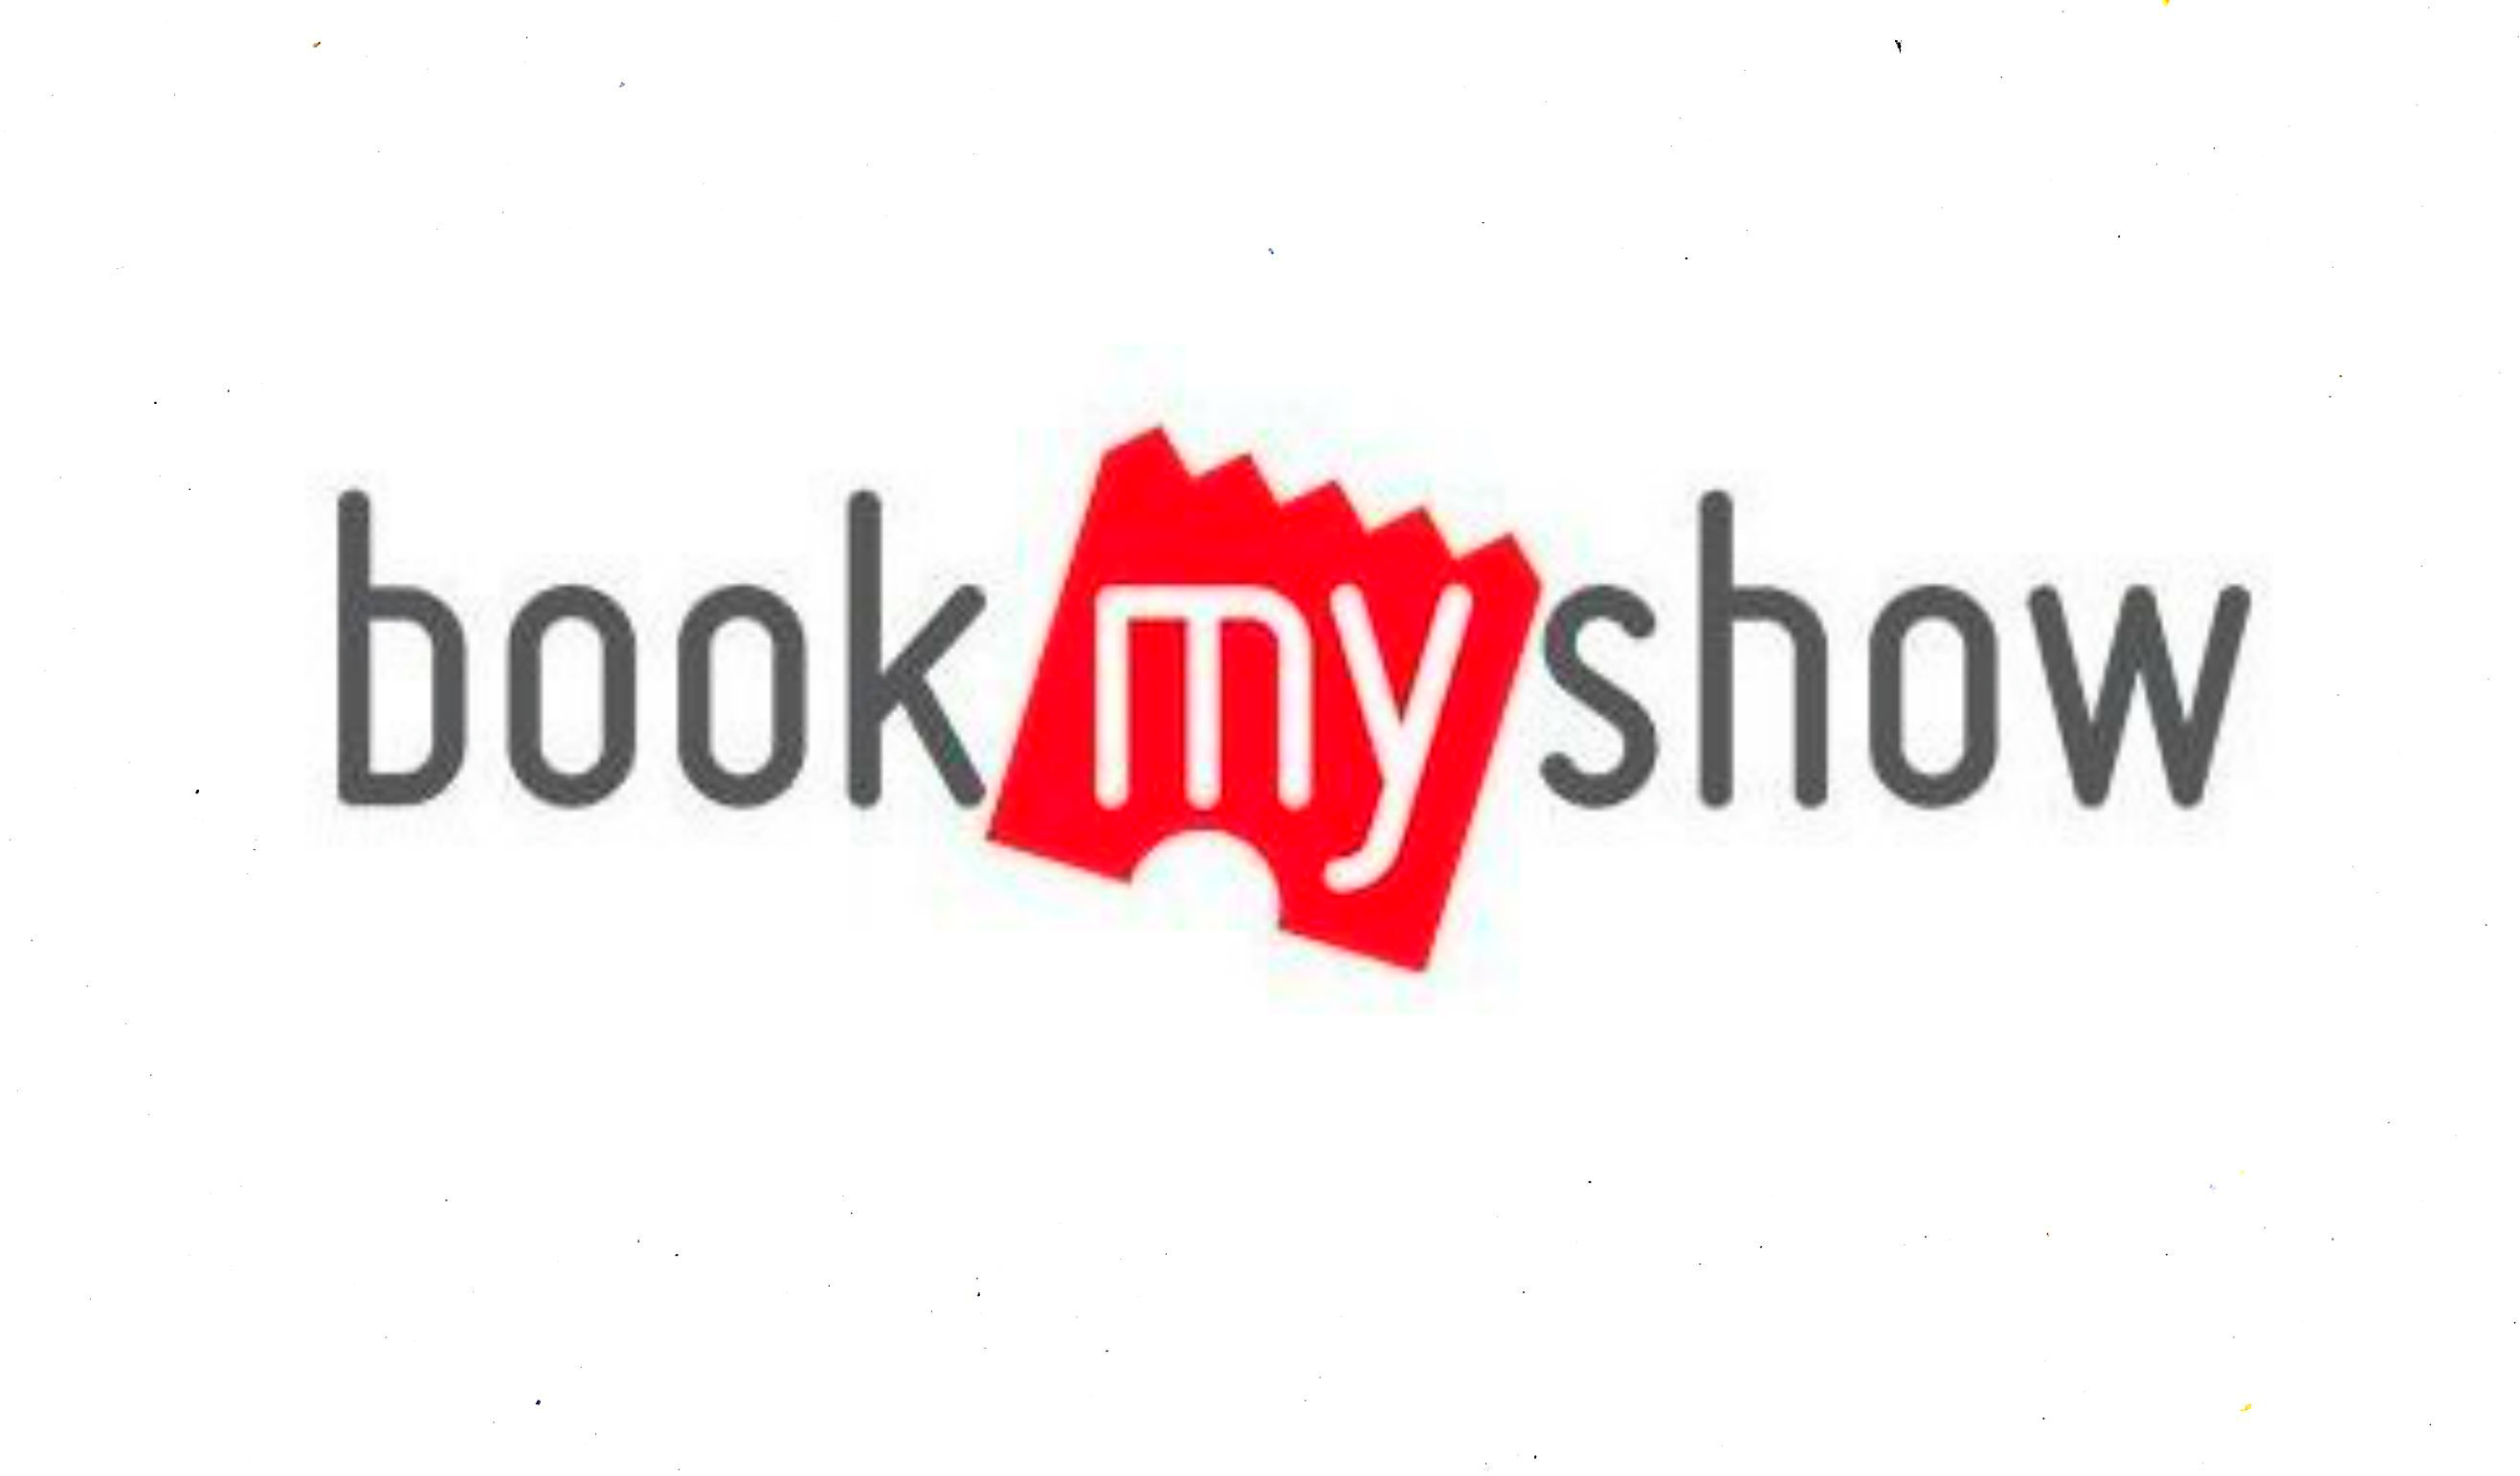 BookMyShow Acquires Hyderabad Based MastiTickets